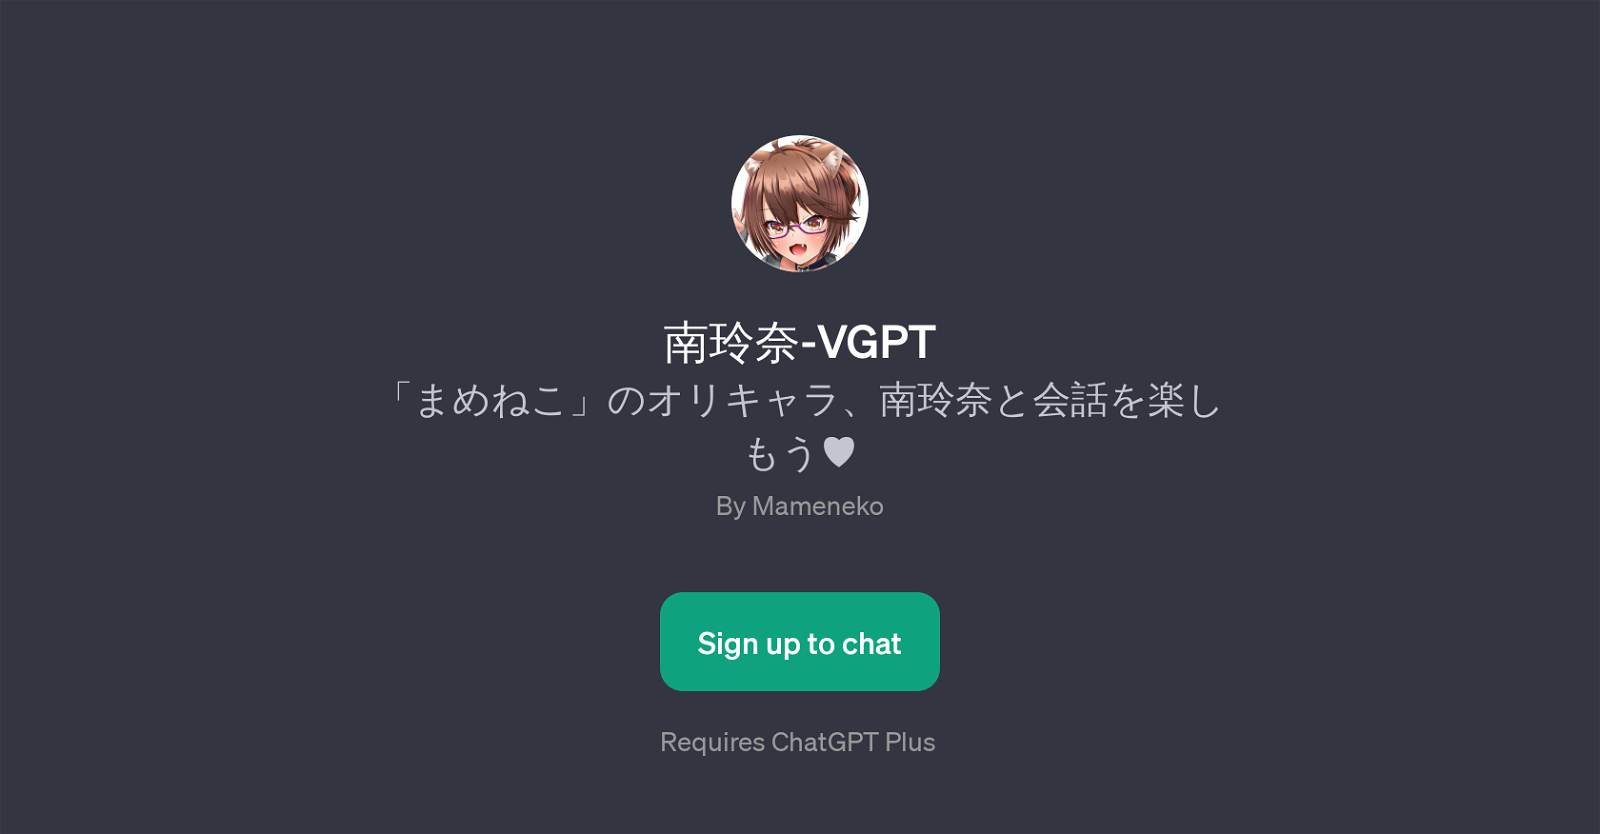 -VGPT website